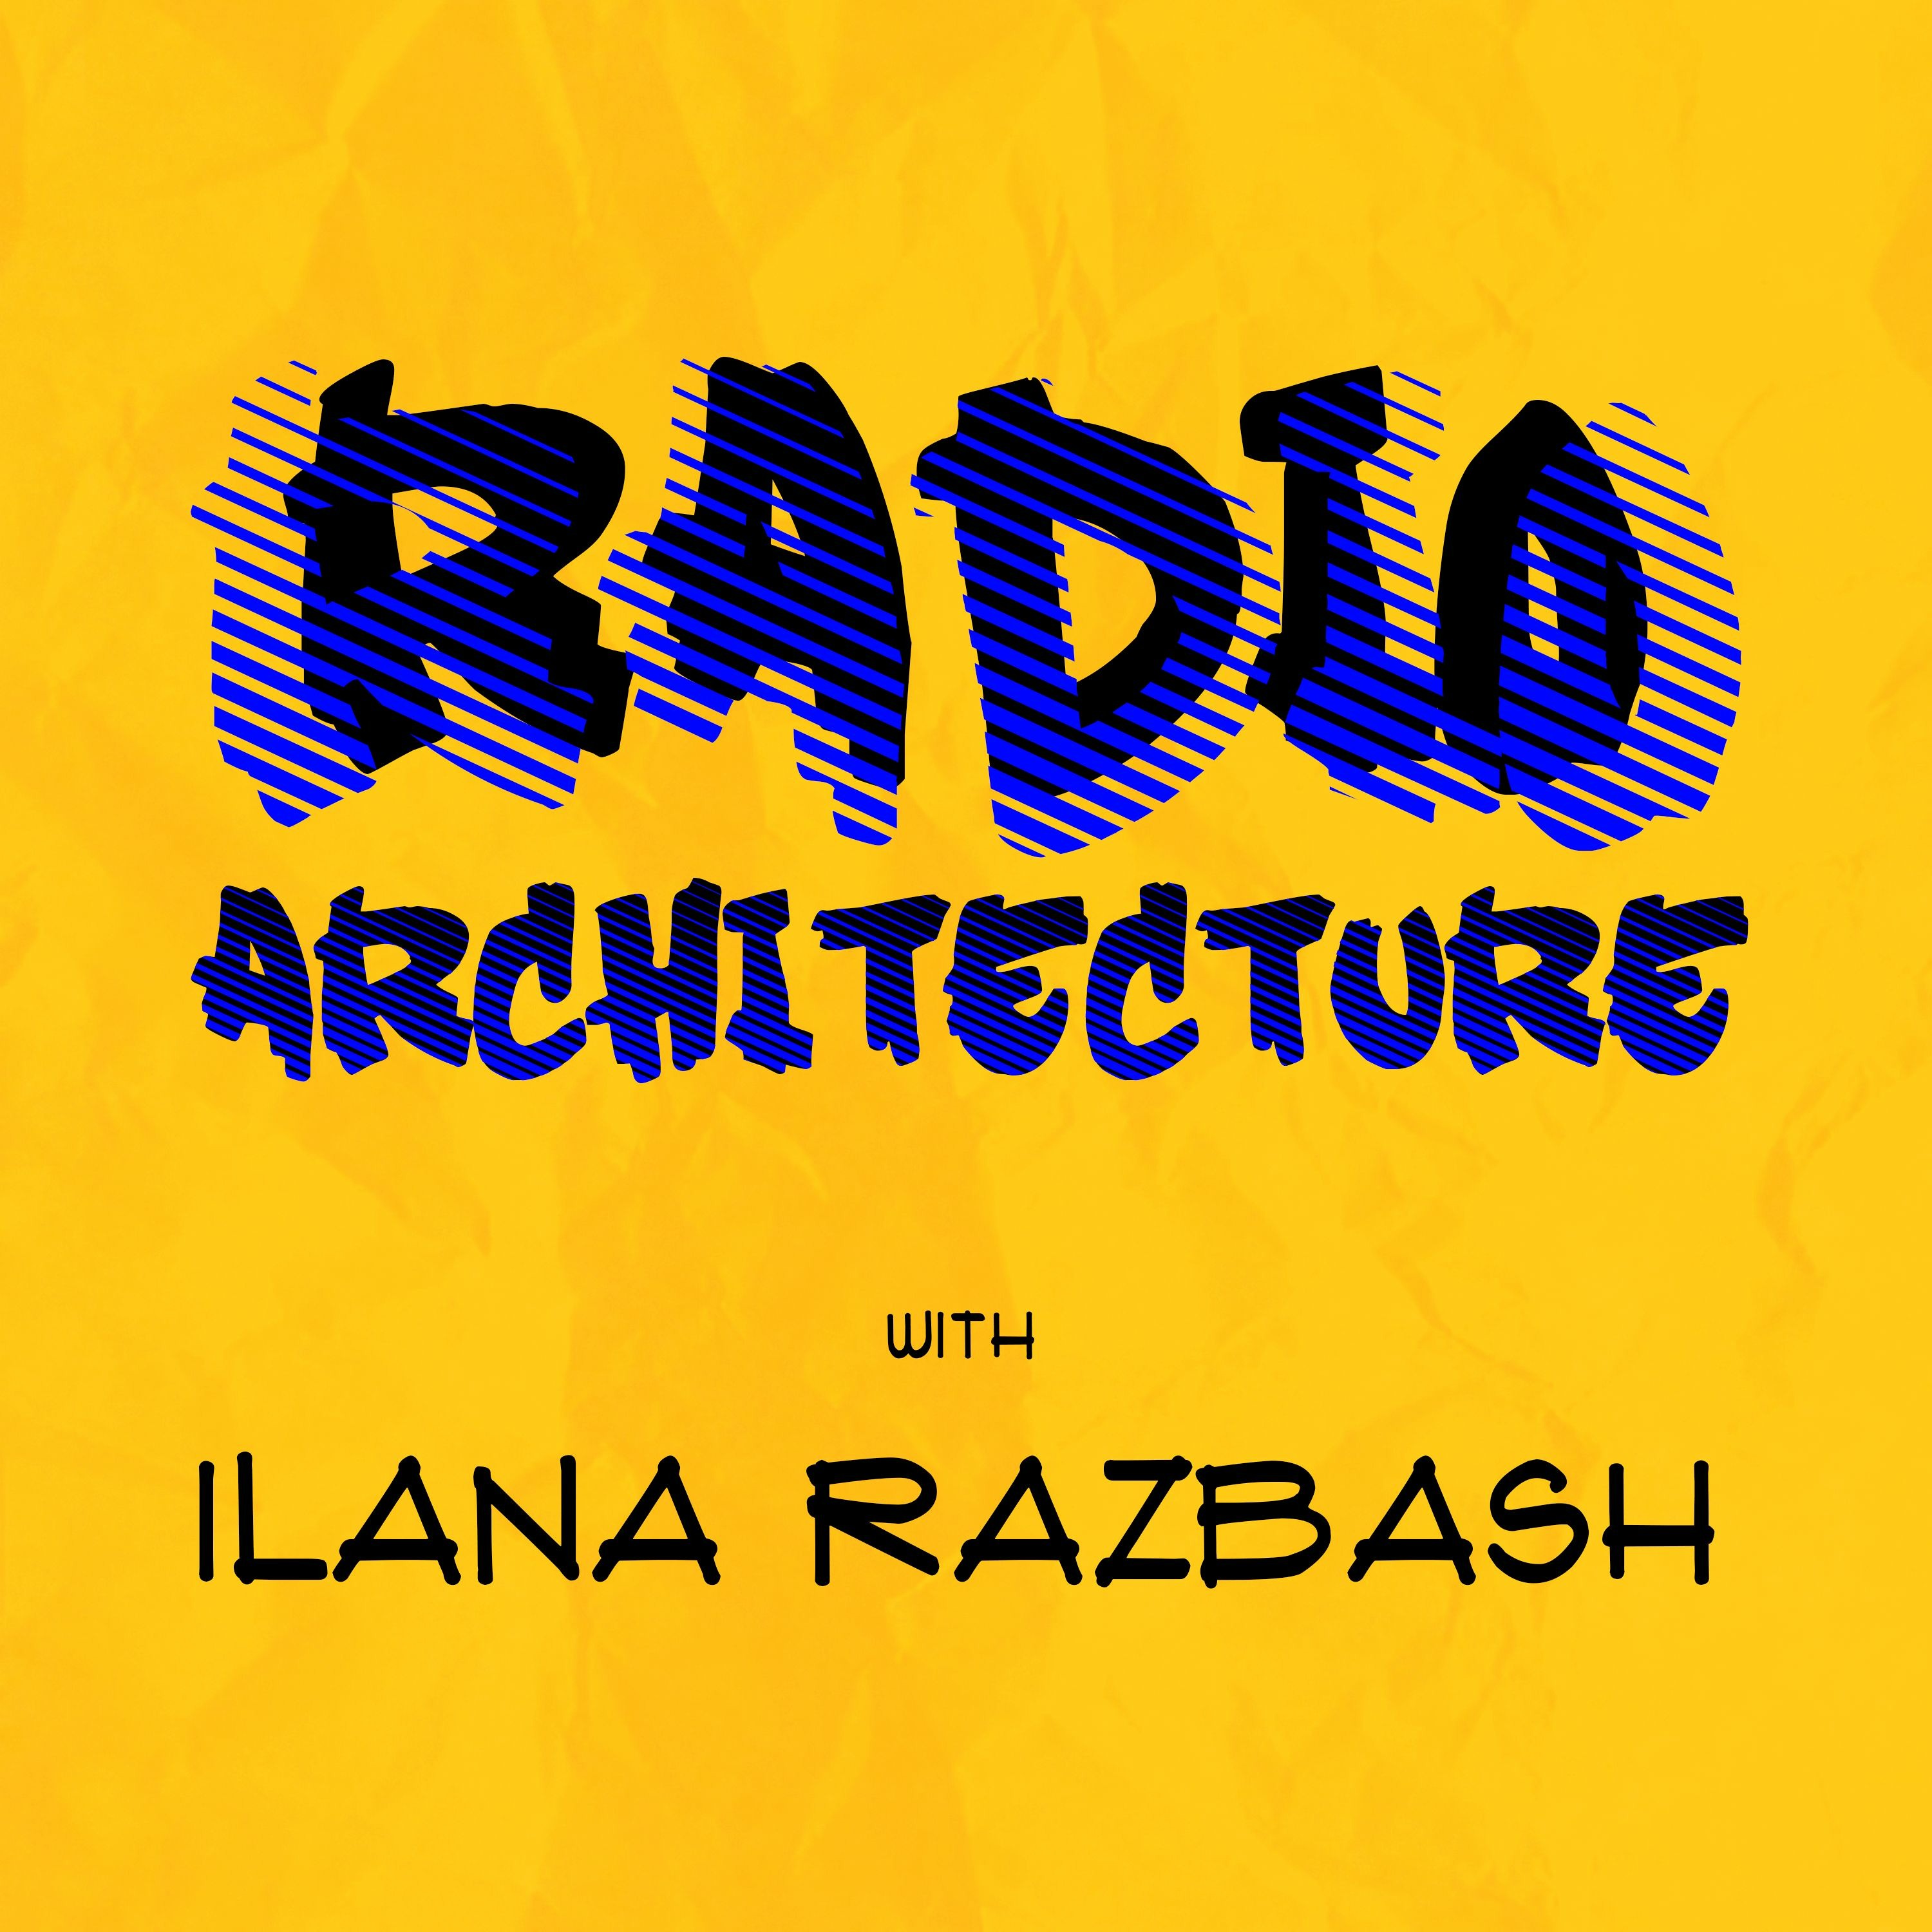 Radio Architecture With Ilana Razbash - Episode 32 (Andrew Gall)